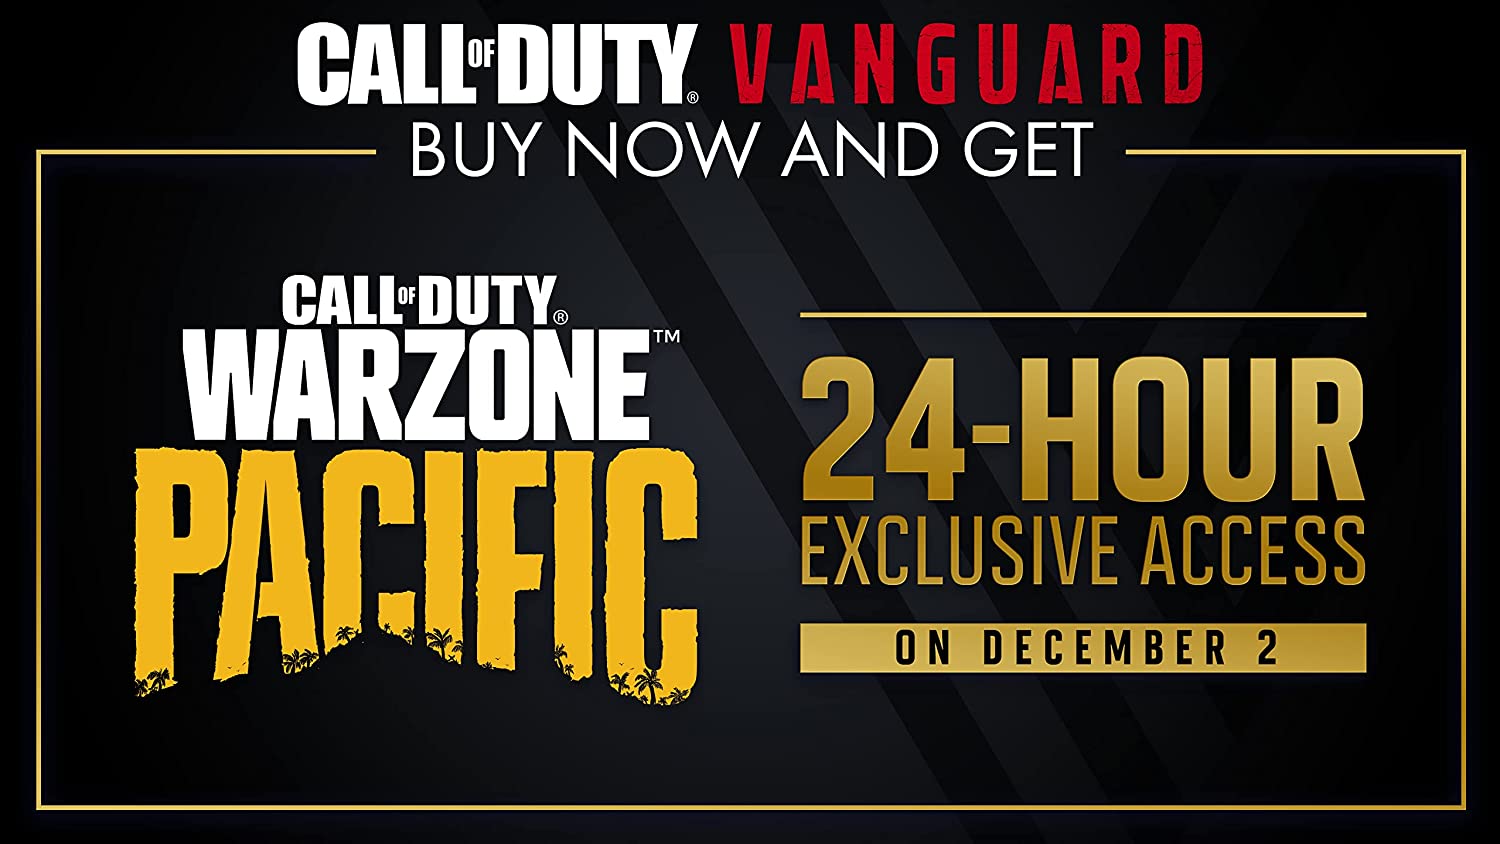 Call of Duty: Vanguard - Xbox One - image 3 of 16